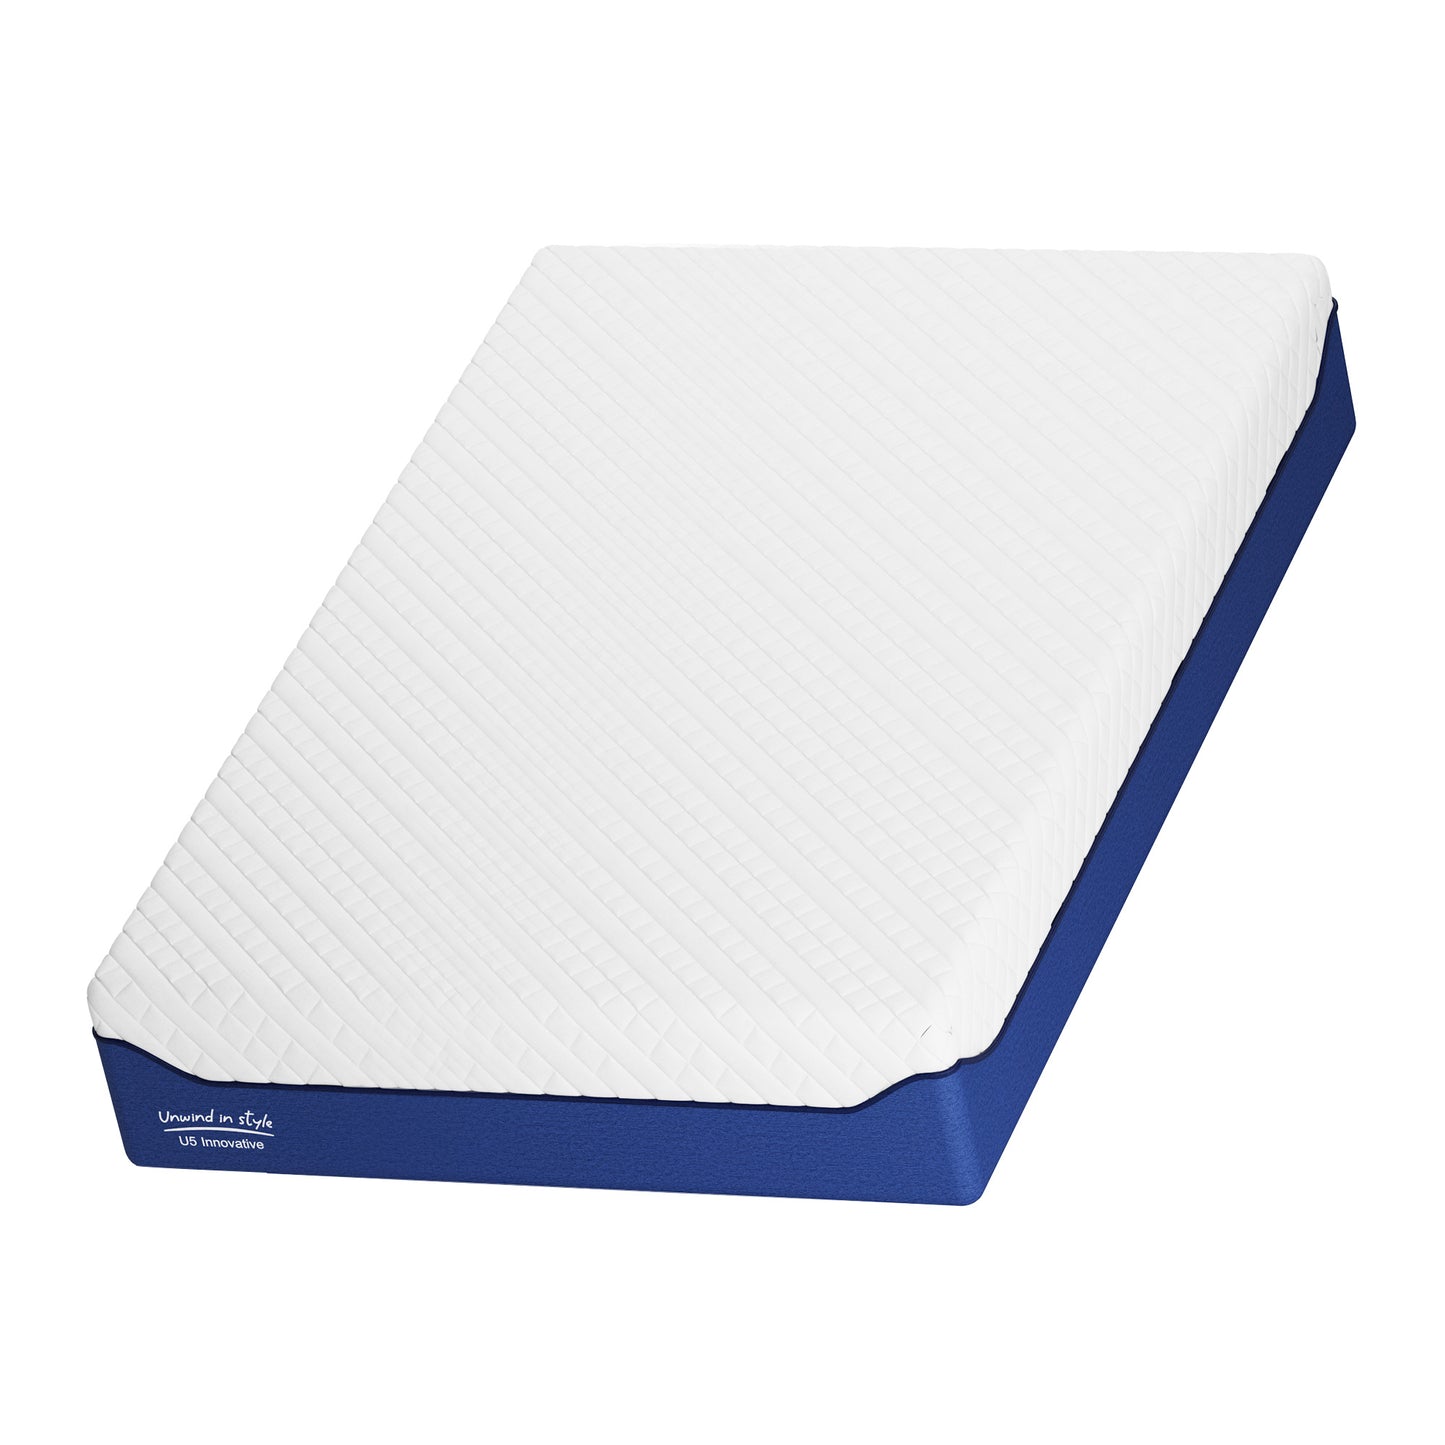 SogesPower 14inches Thickness Hybrid Mattress Gel Memory Foam- Twin, White+Blue